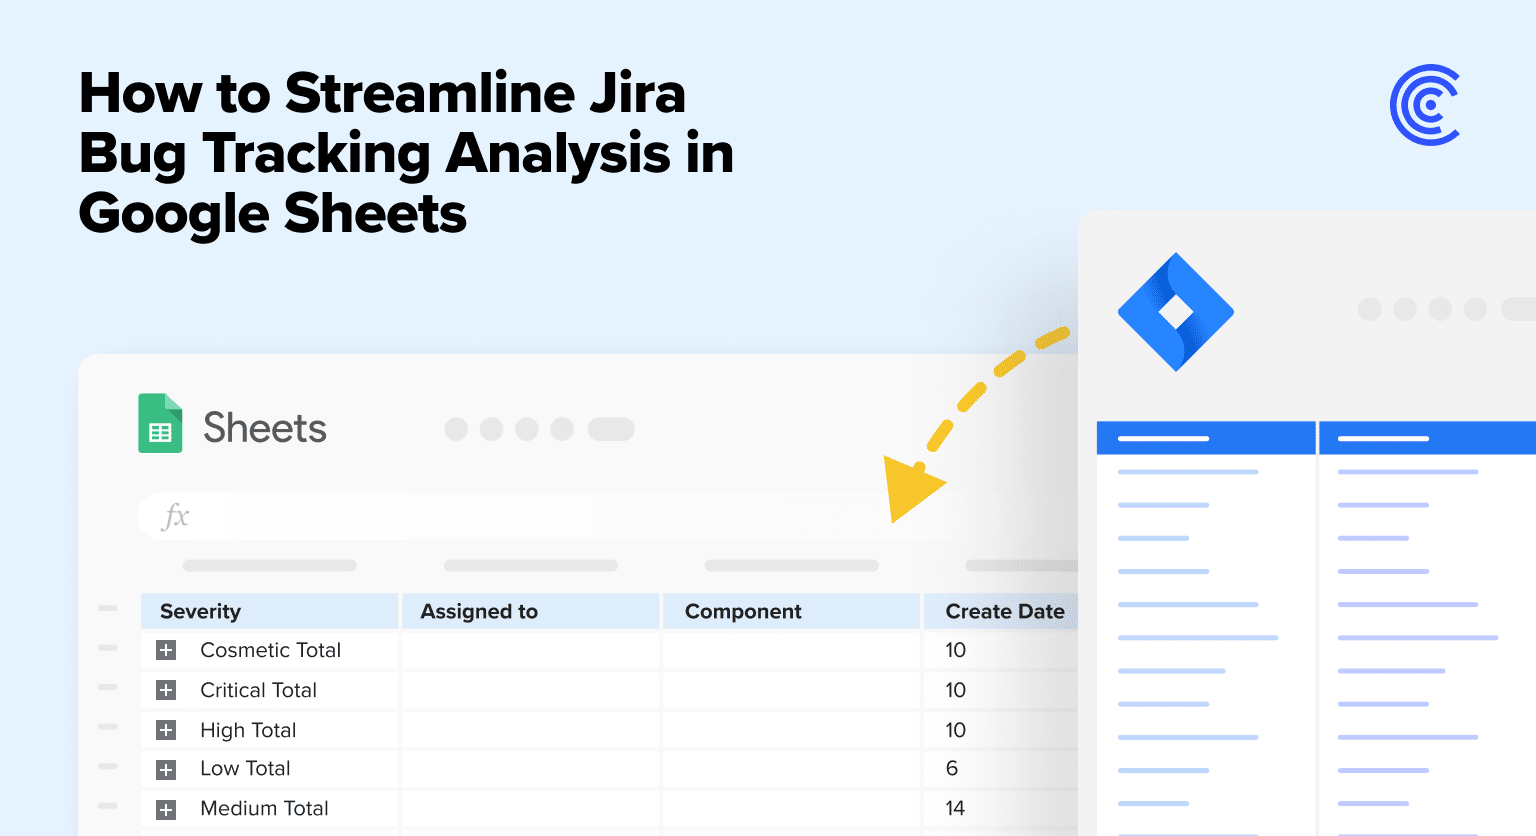 How to Streamline Jira Bug Tracking Analysis in Google Sheets